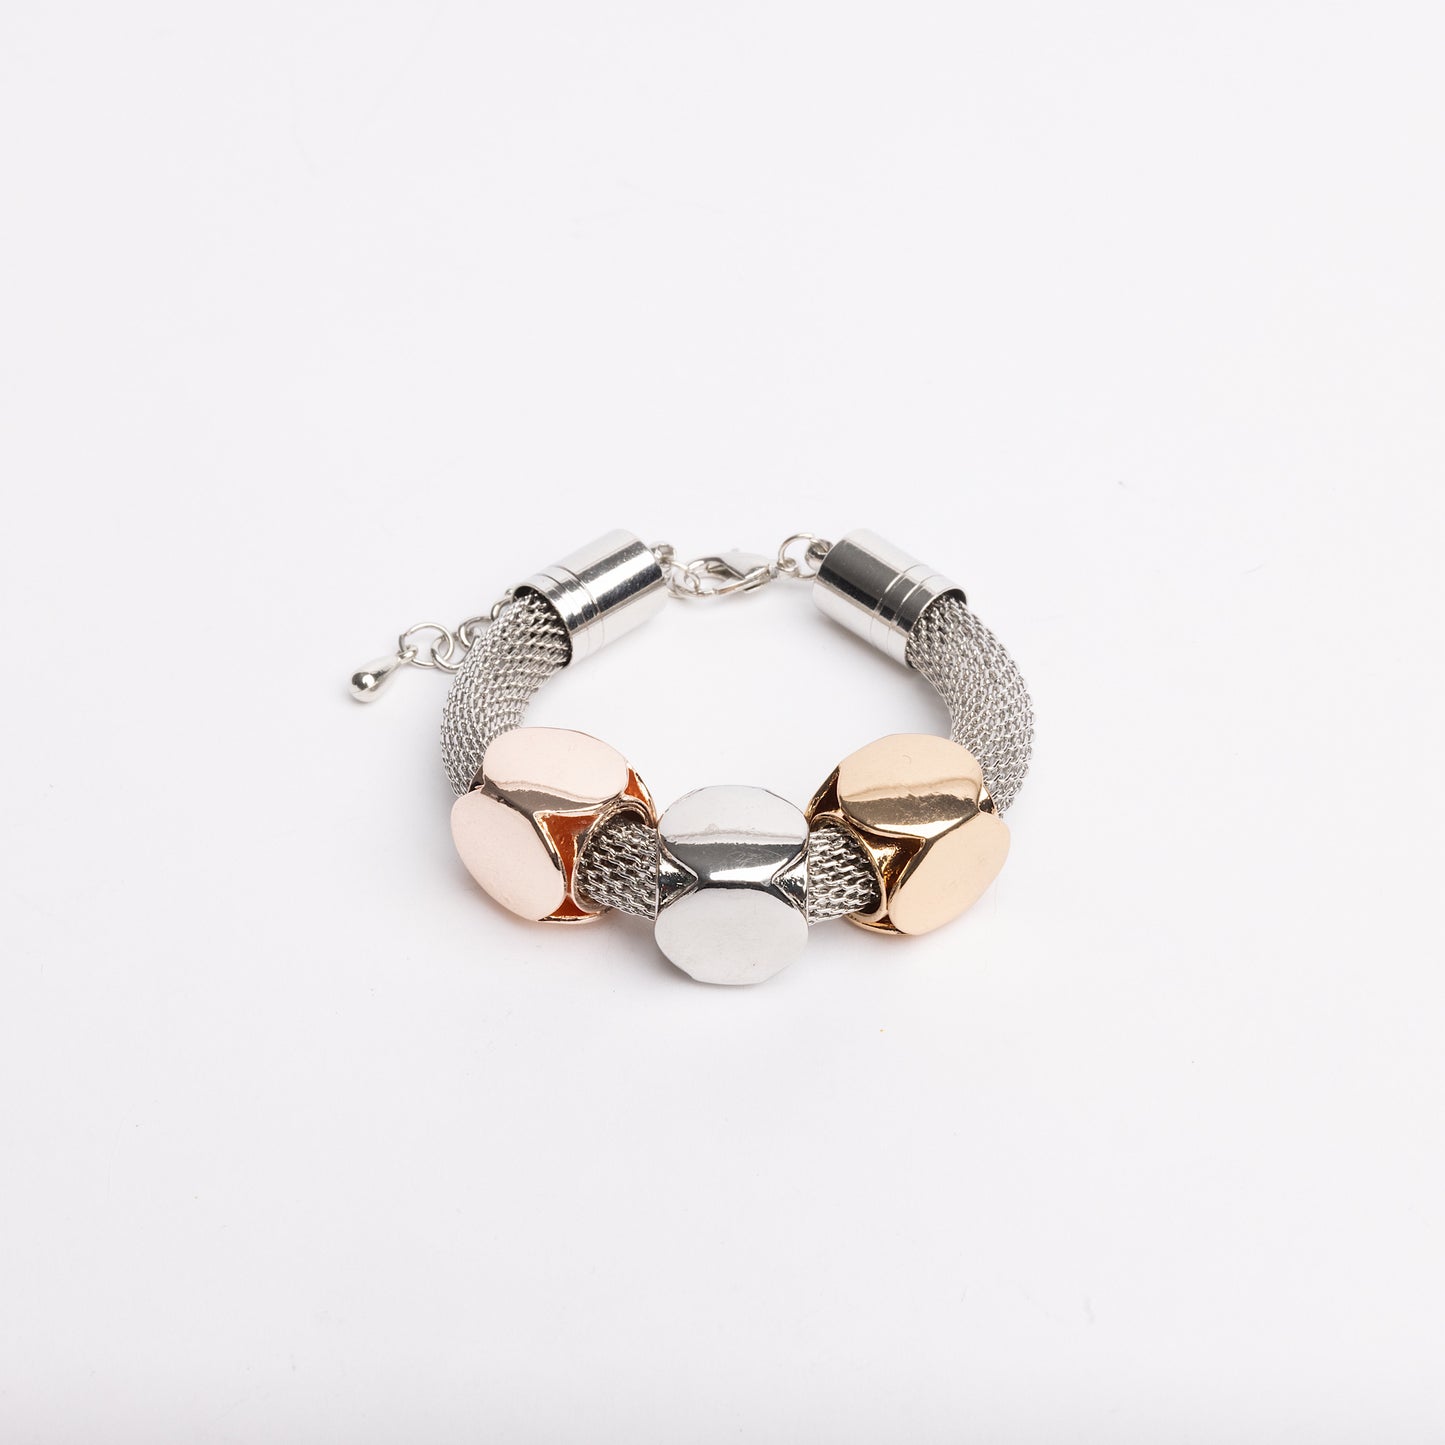 Pink + Silver Cuff Bracelet